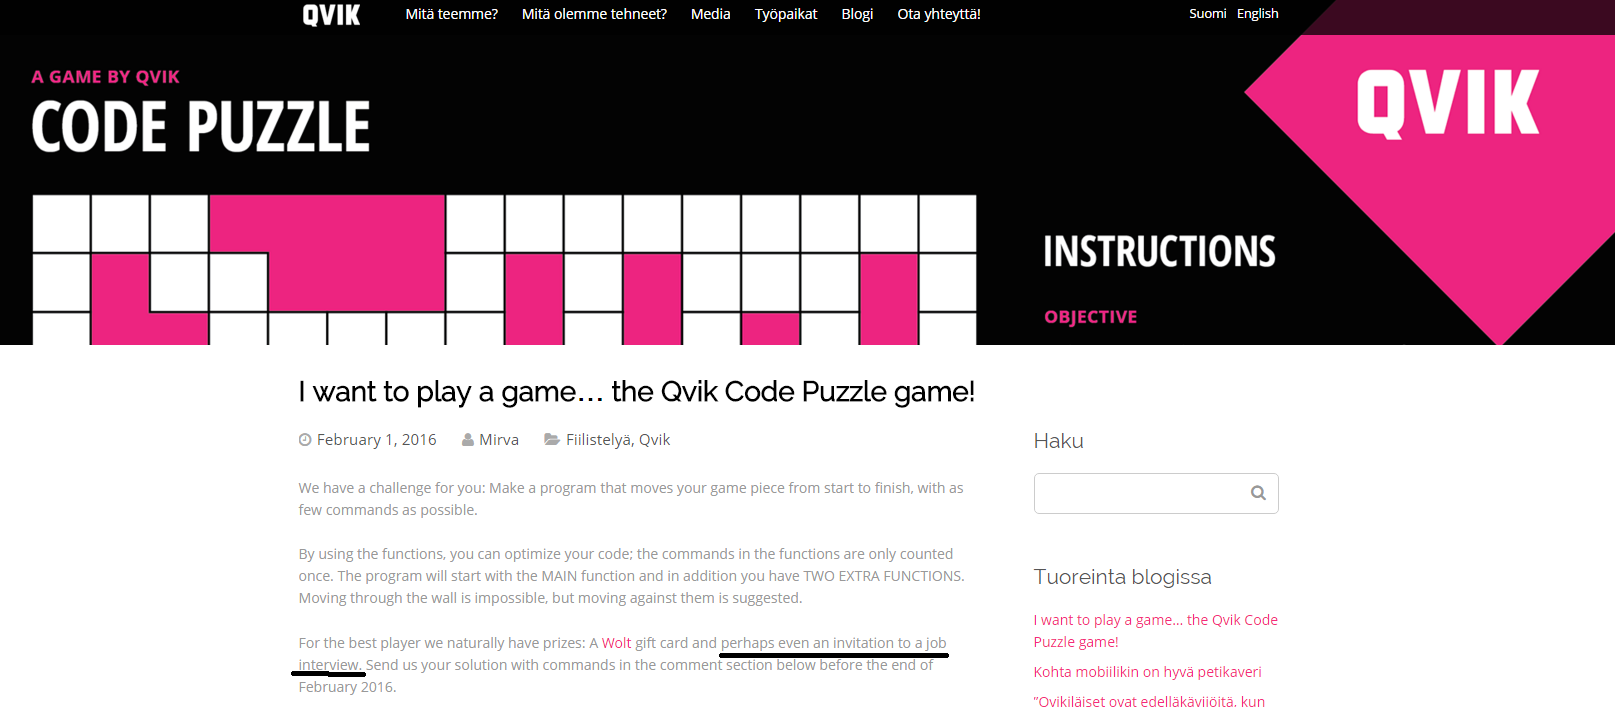 qvik-code-puzzle-challenge-recruitment-game